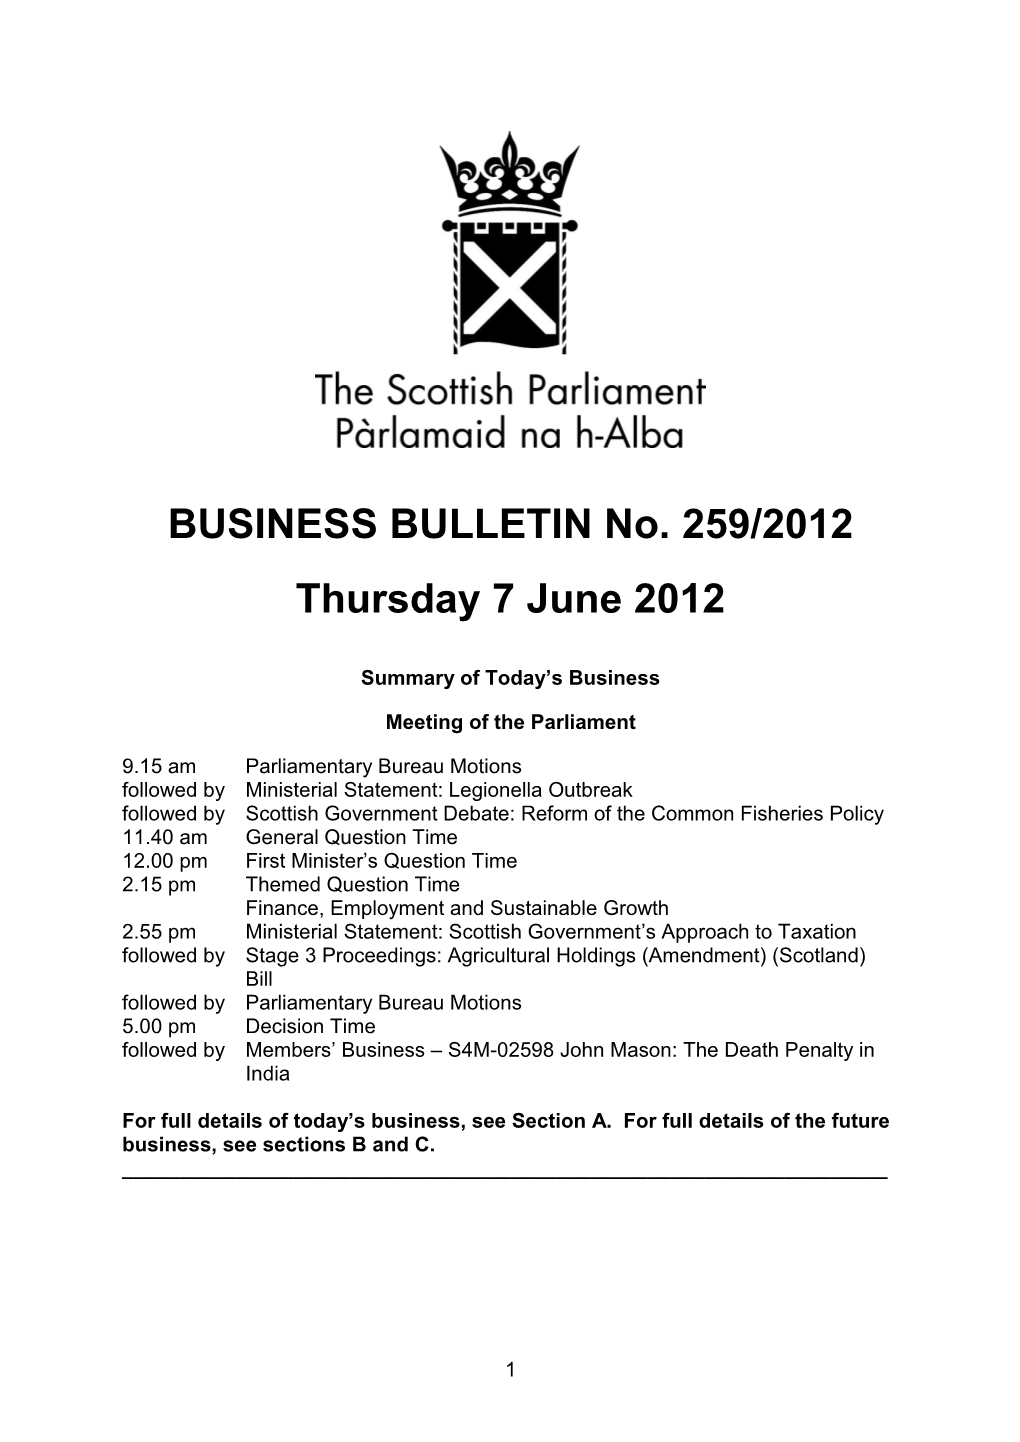 BUSINESS BULLETIN No. 259/2012 Thursday 7 June 2012